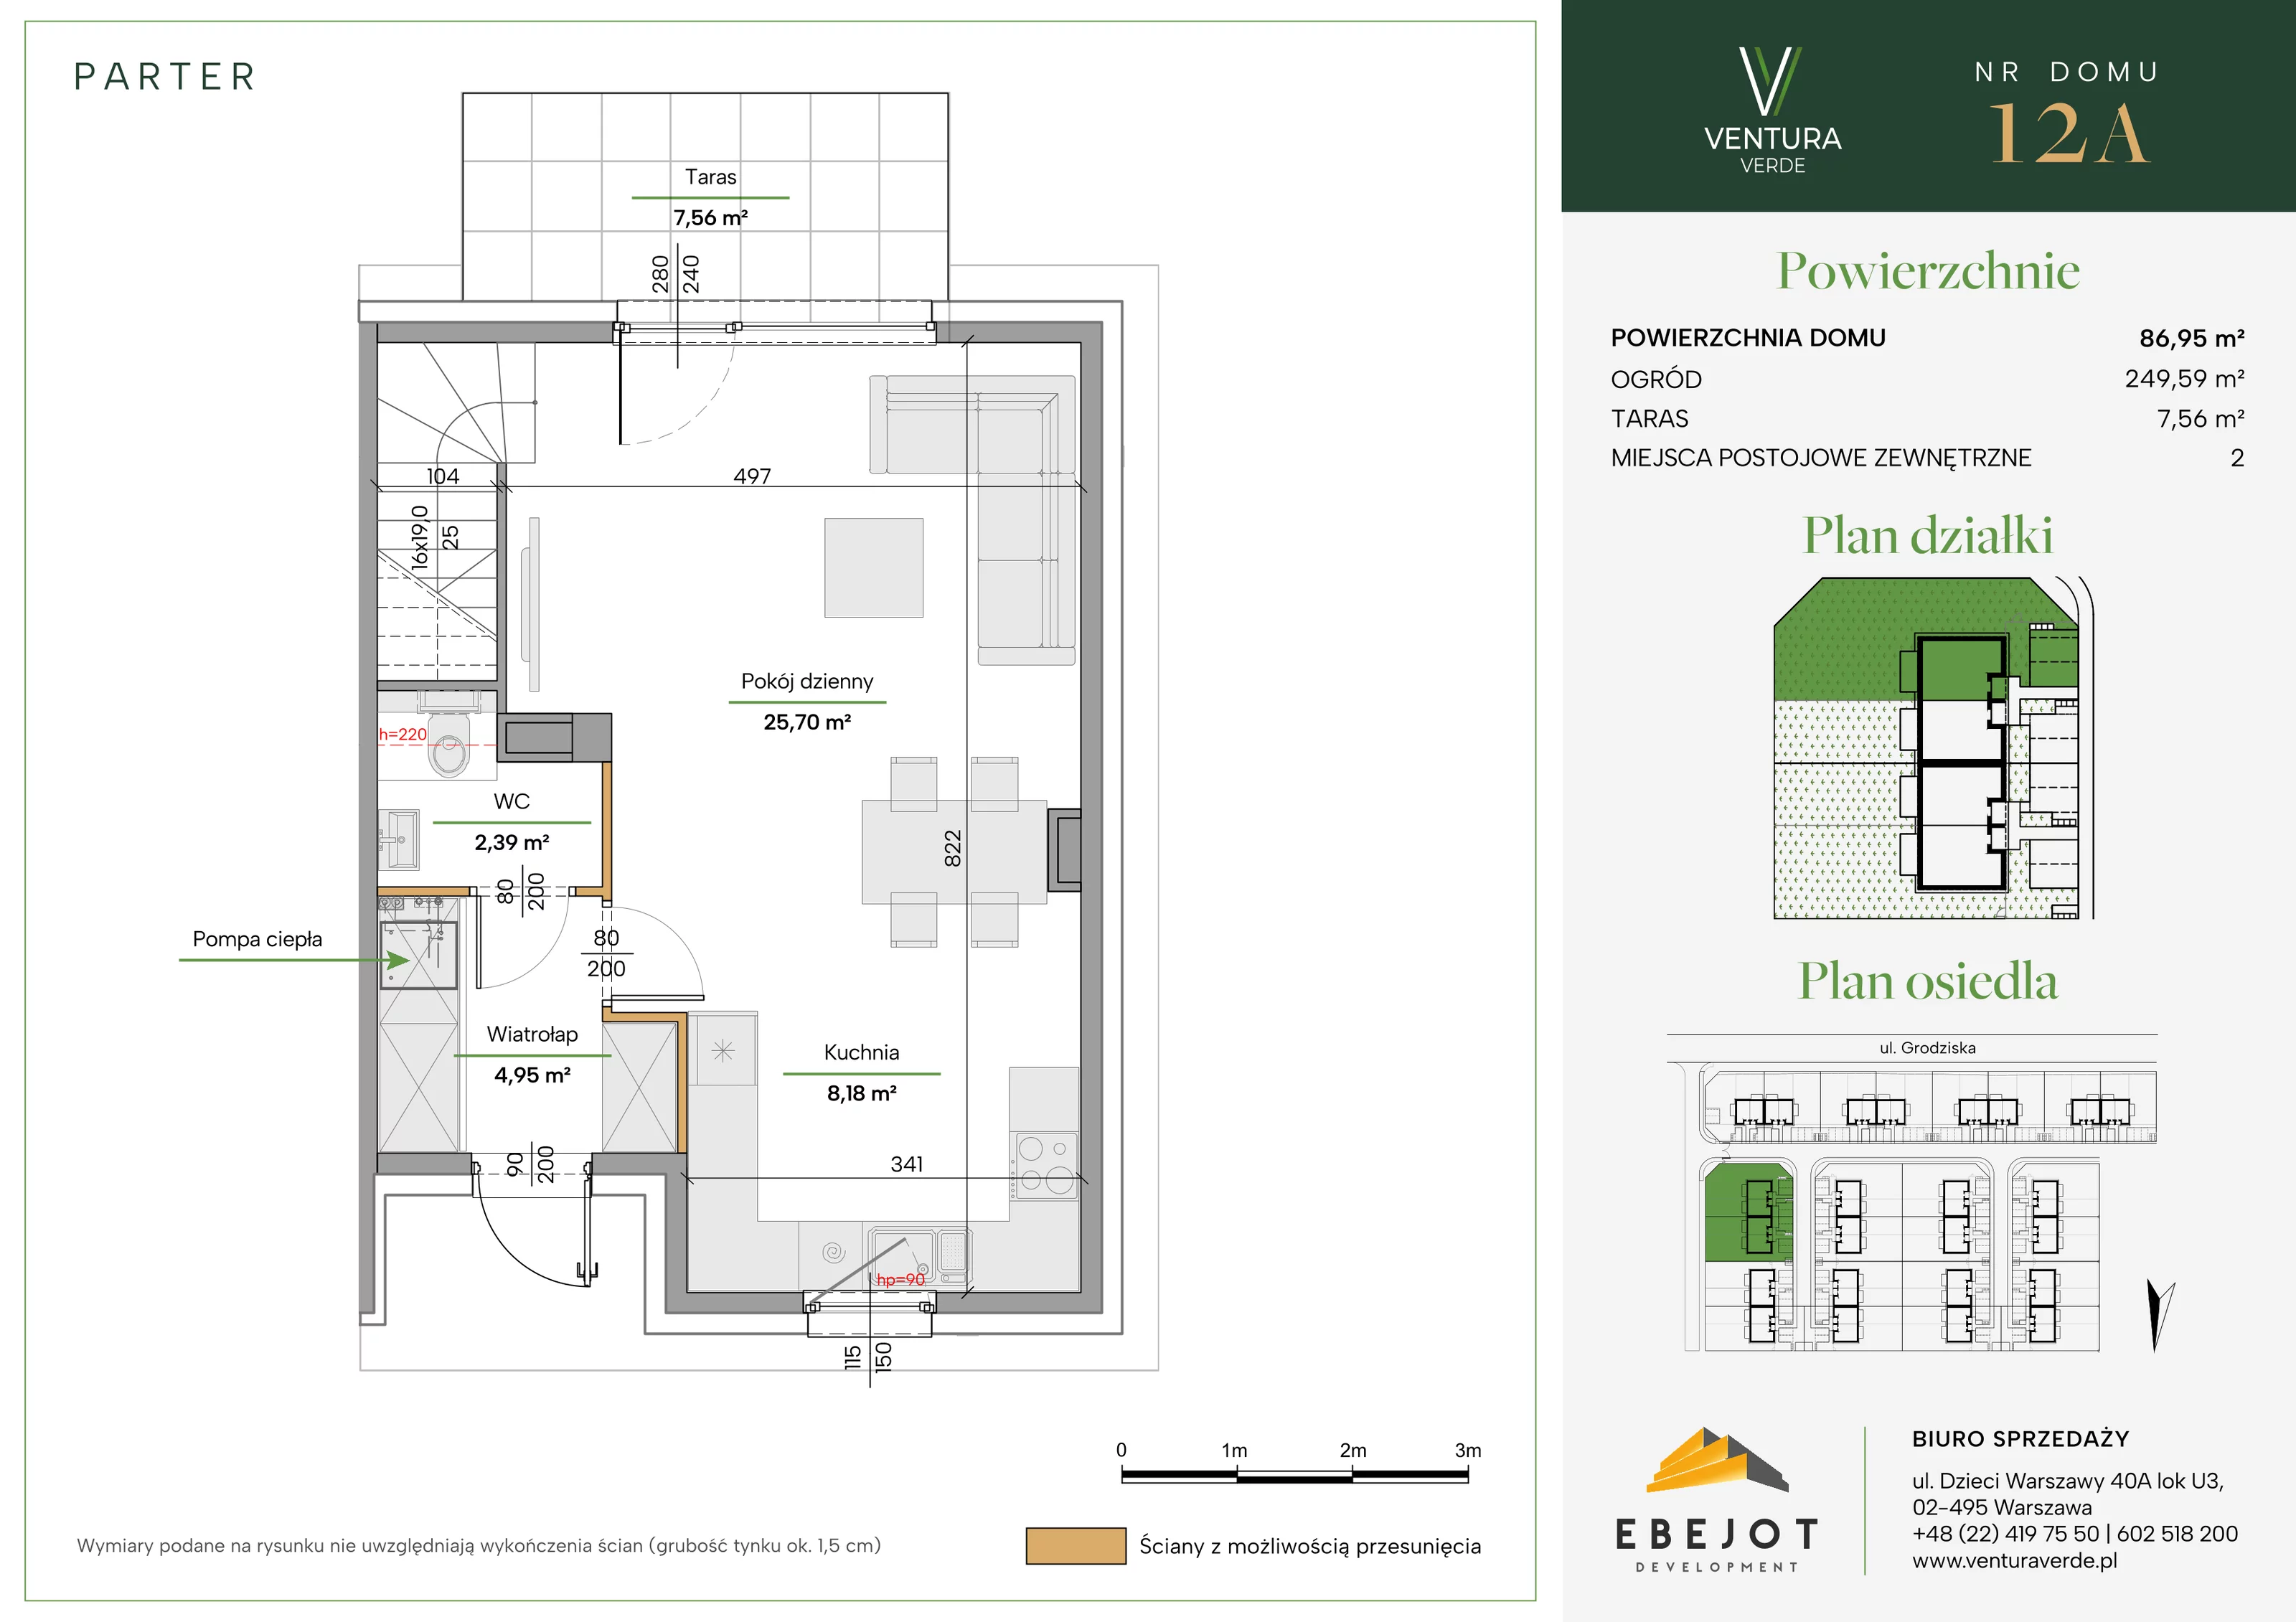 Dom 86,95 m², oferta nr 12A, Ventura Verde II, Stara Wieś, ul. Grodziska